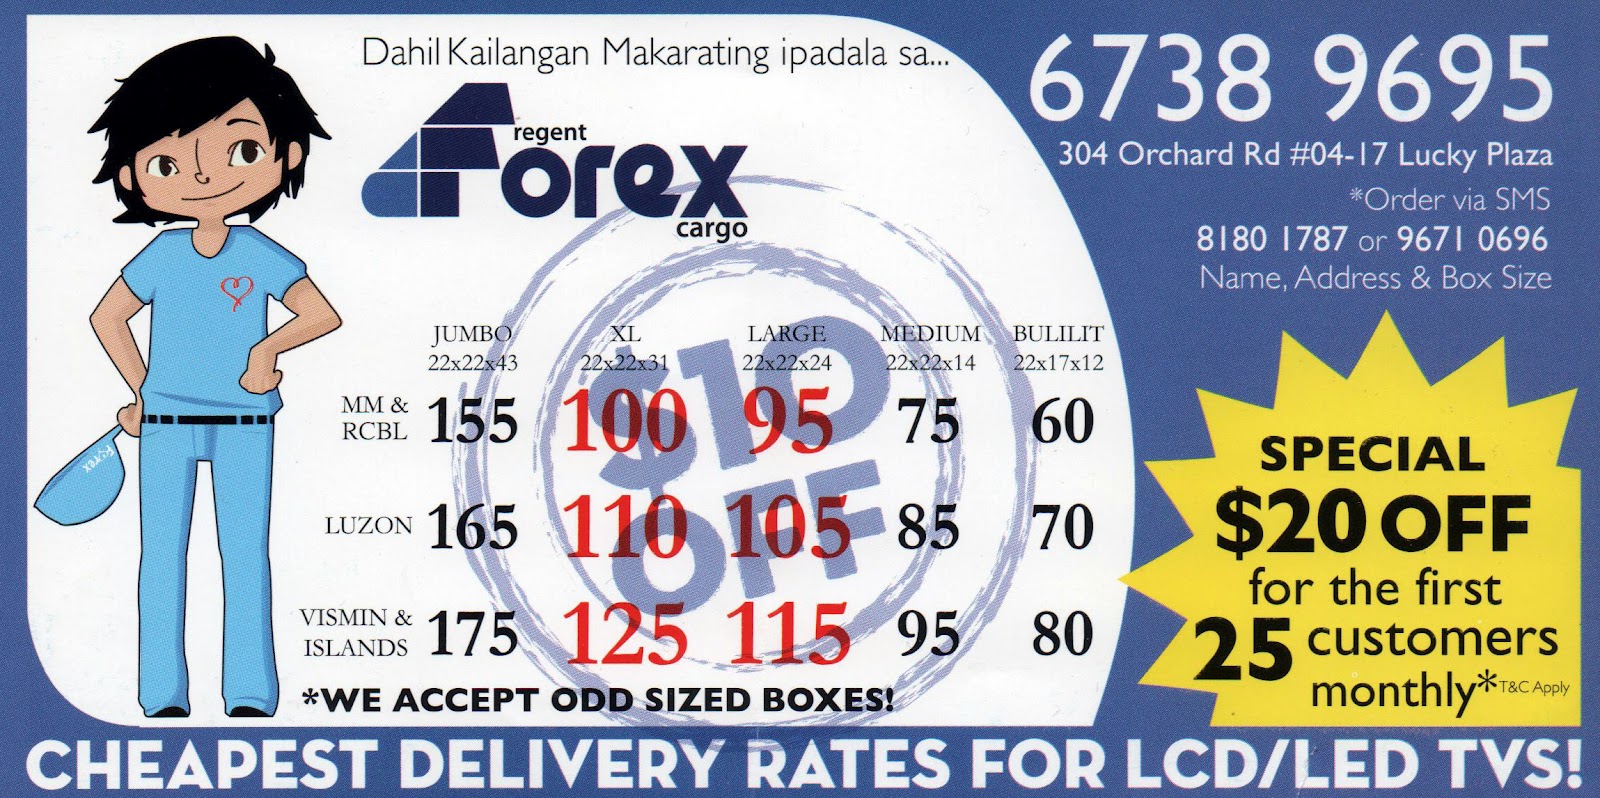 Forex course singapore price